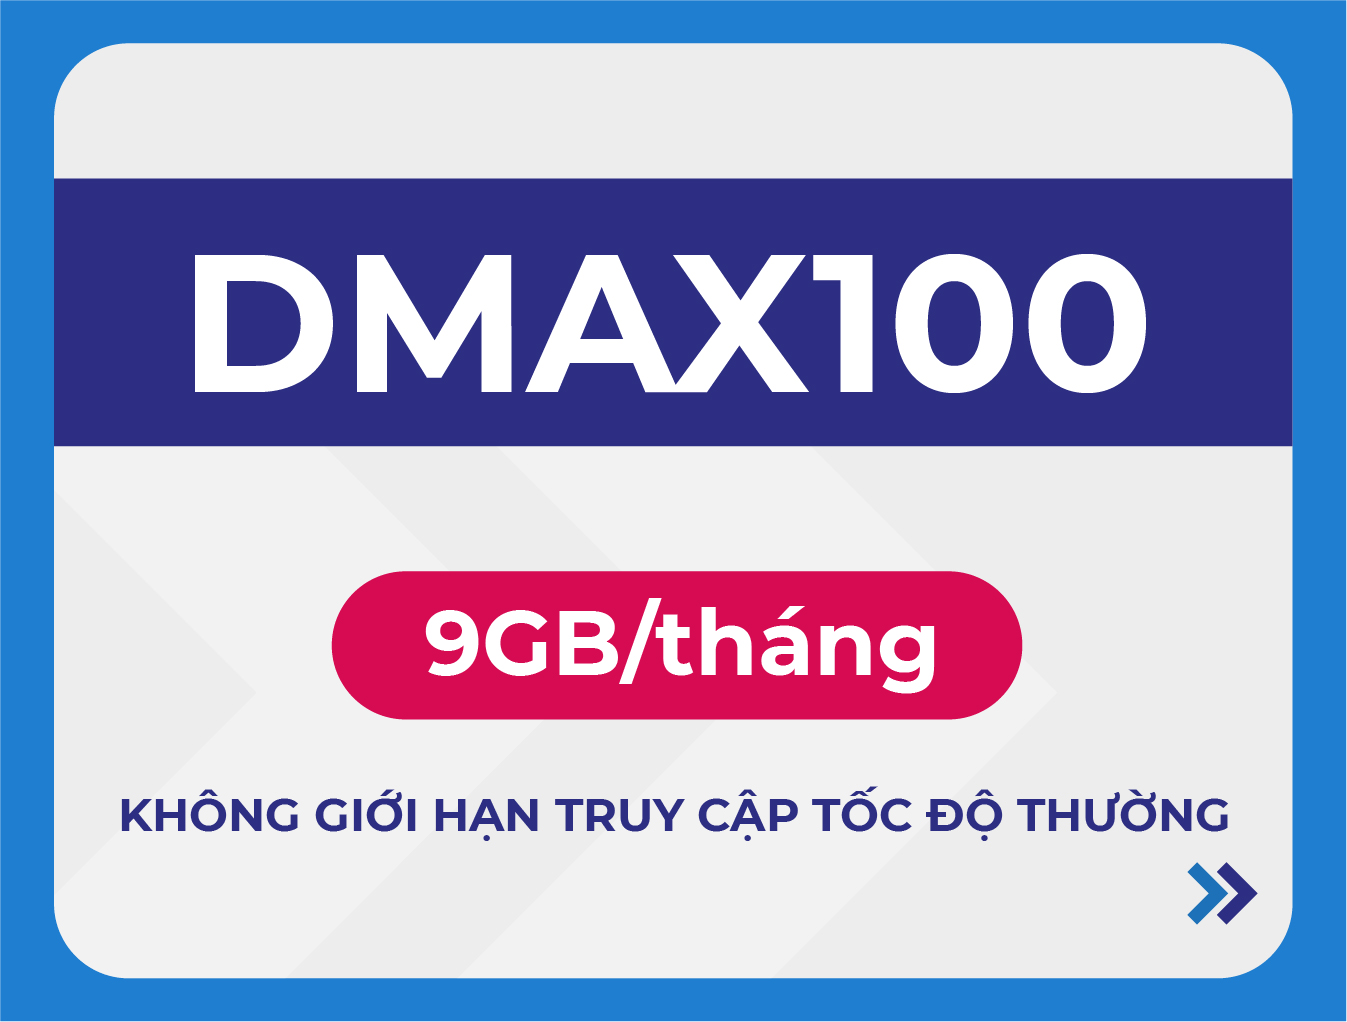 DMAX100